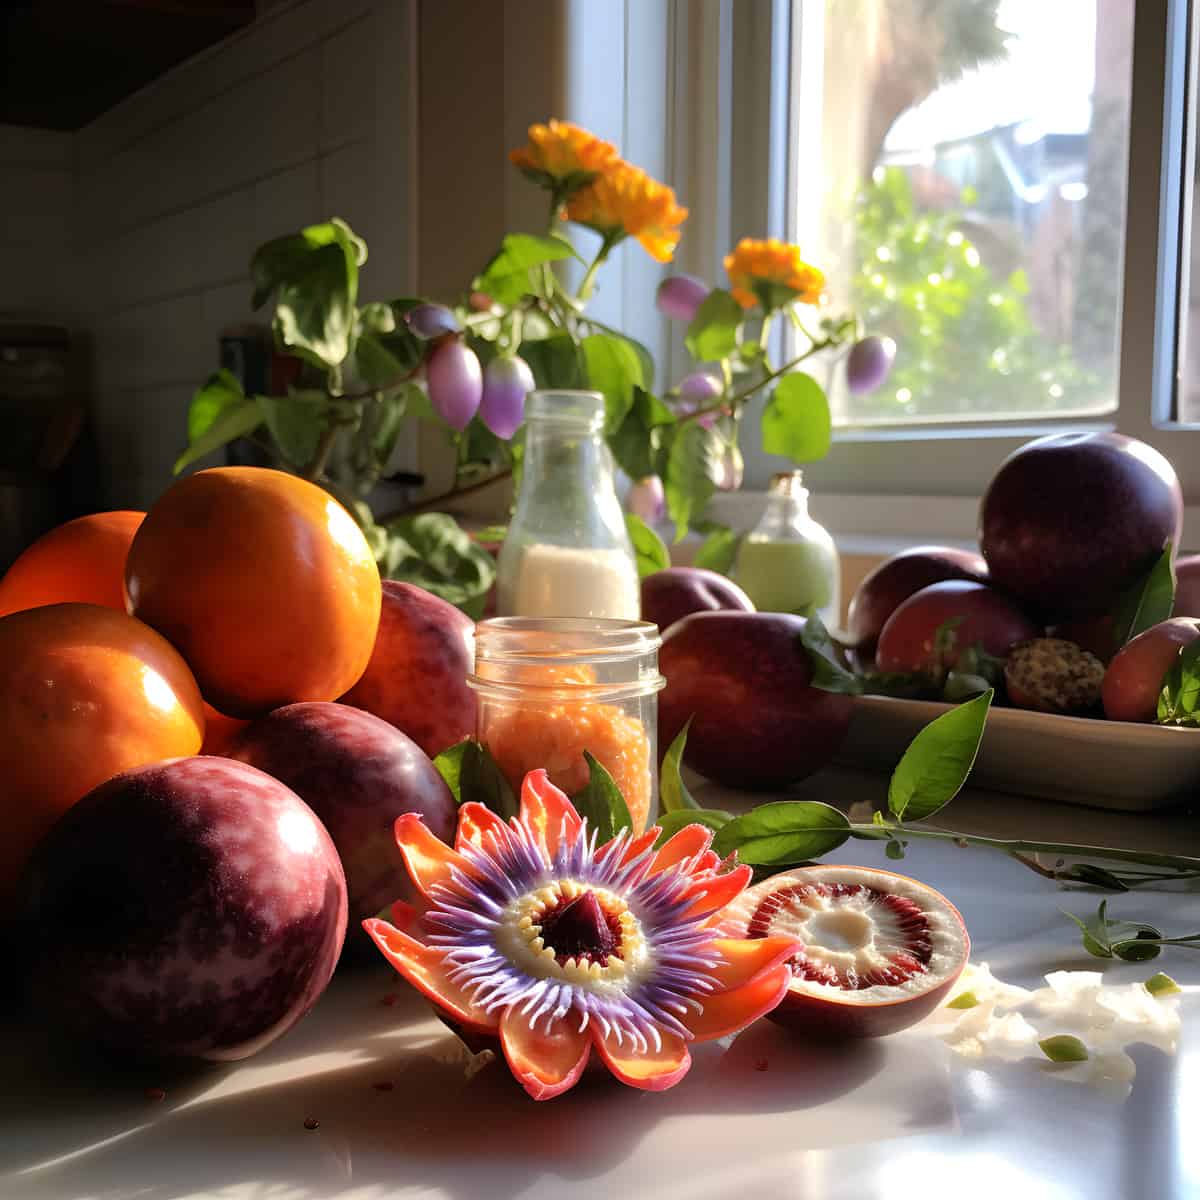 Passiflora Alata Fruit on a kitchen counter